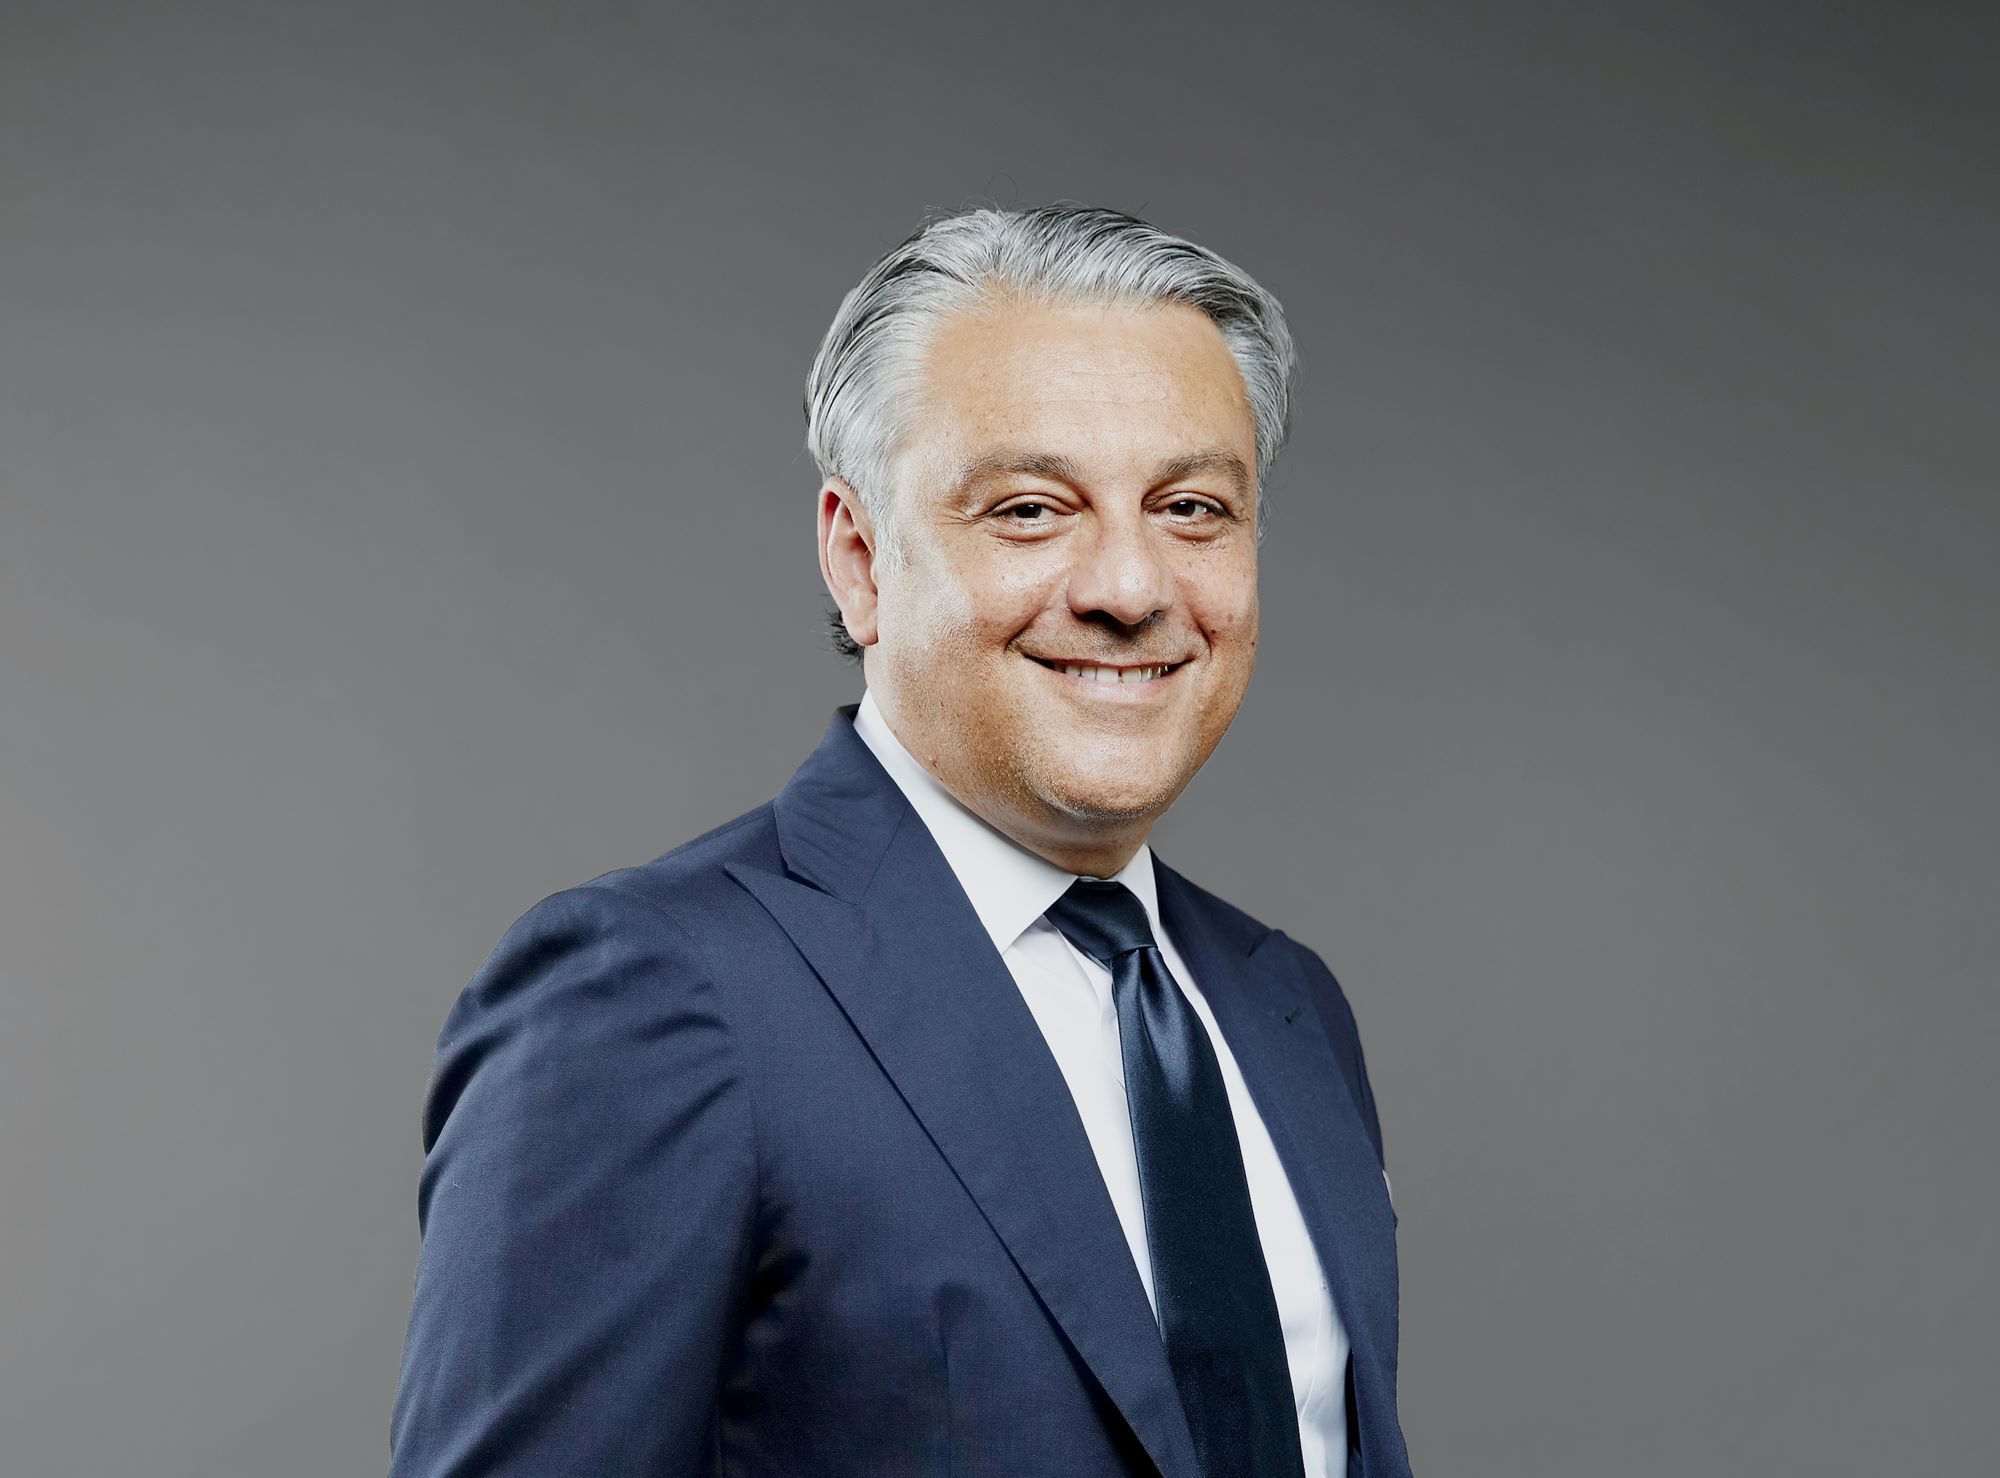 Luca de Meo, CEO di Renault Group